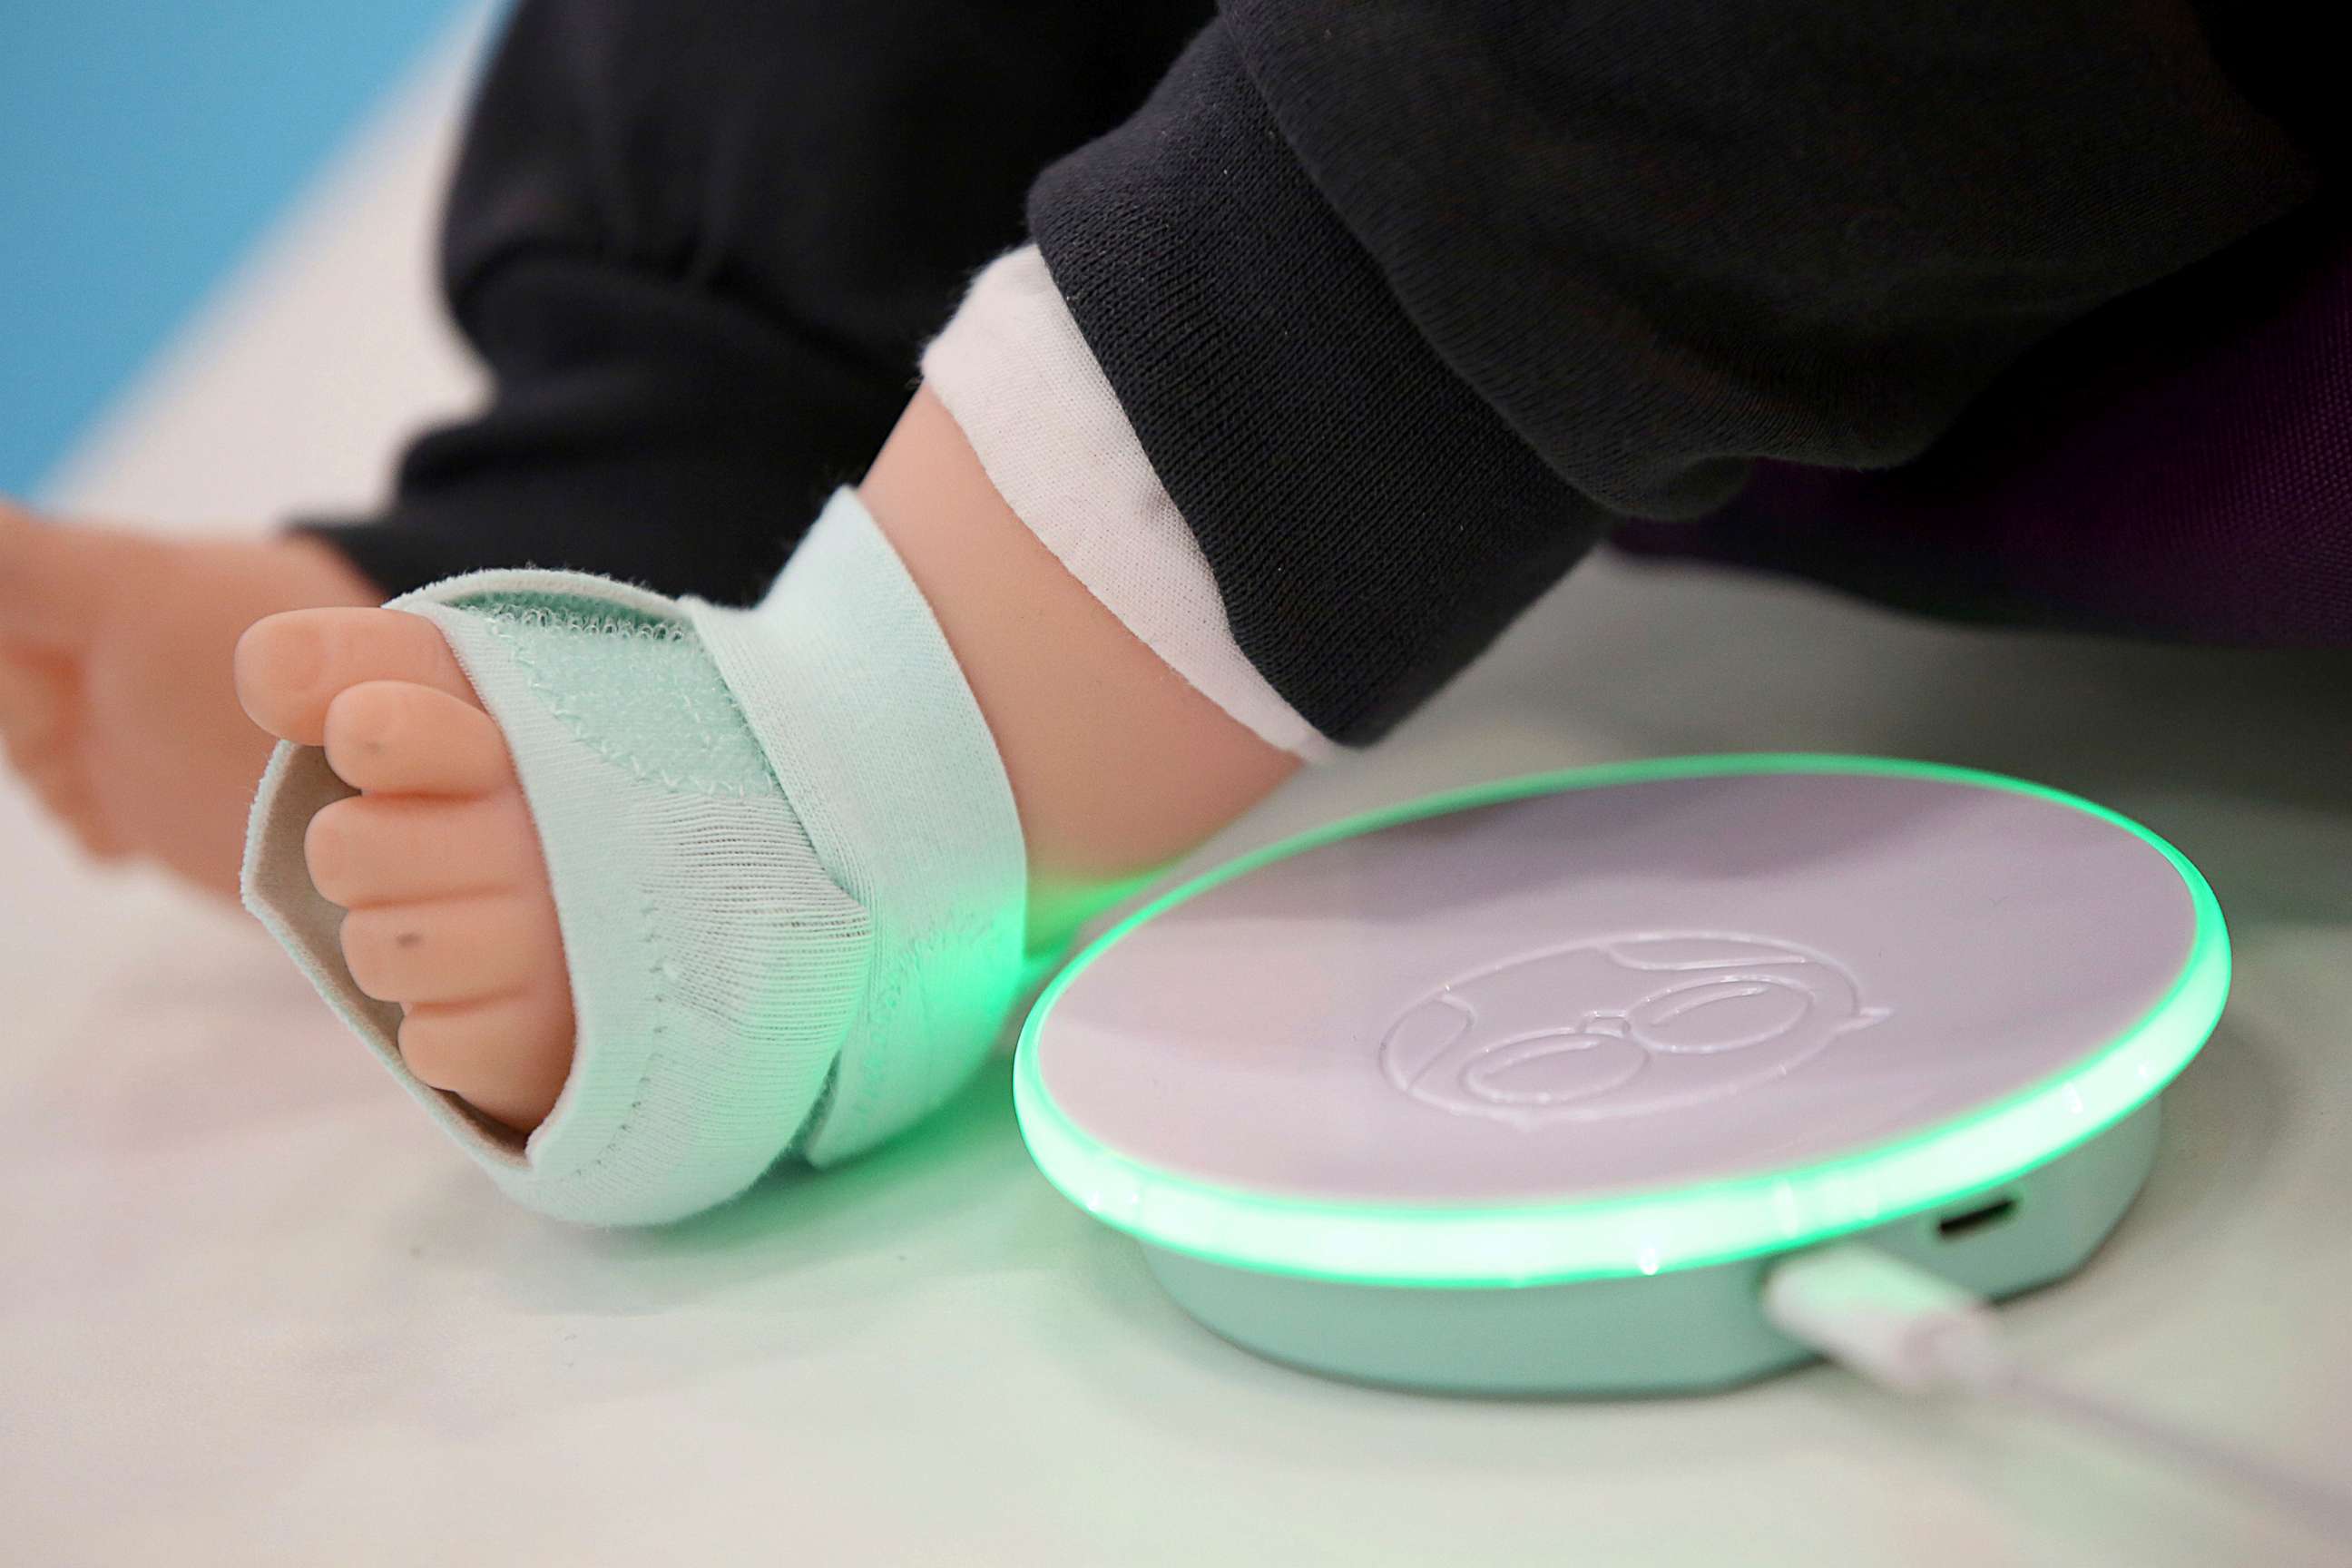 Owlet stops selling baby-monitoring smart socks after FDA warning